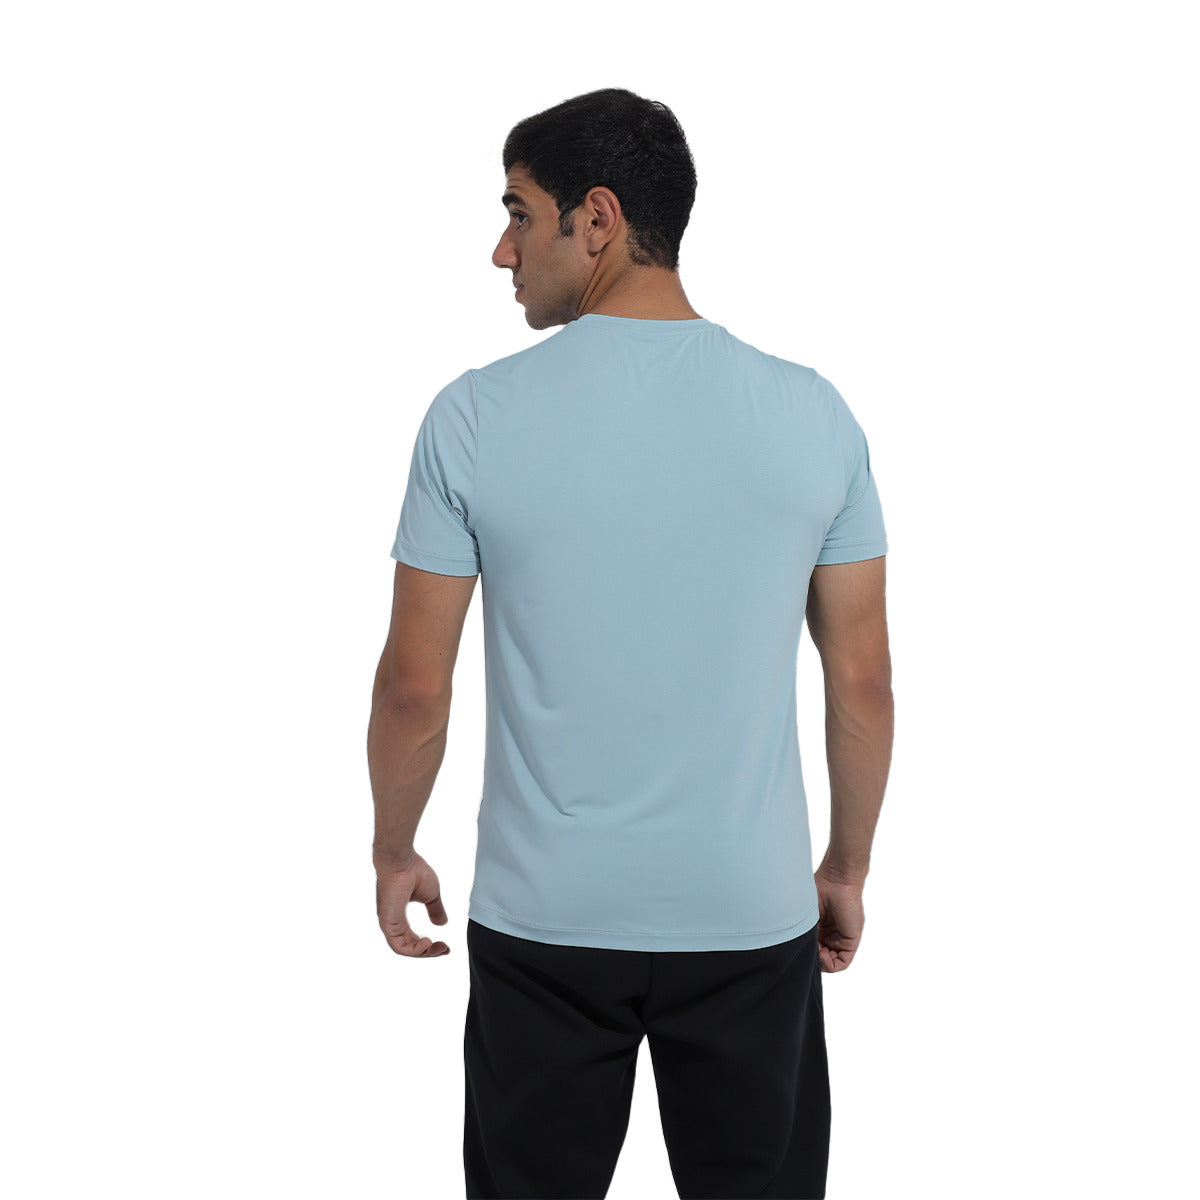 Anta SS Tee Running T-Shirt For Men, Blue Crab